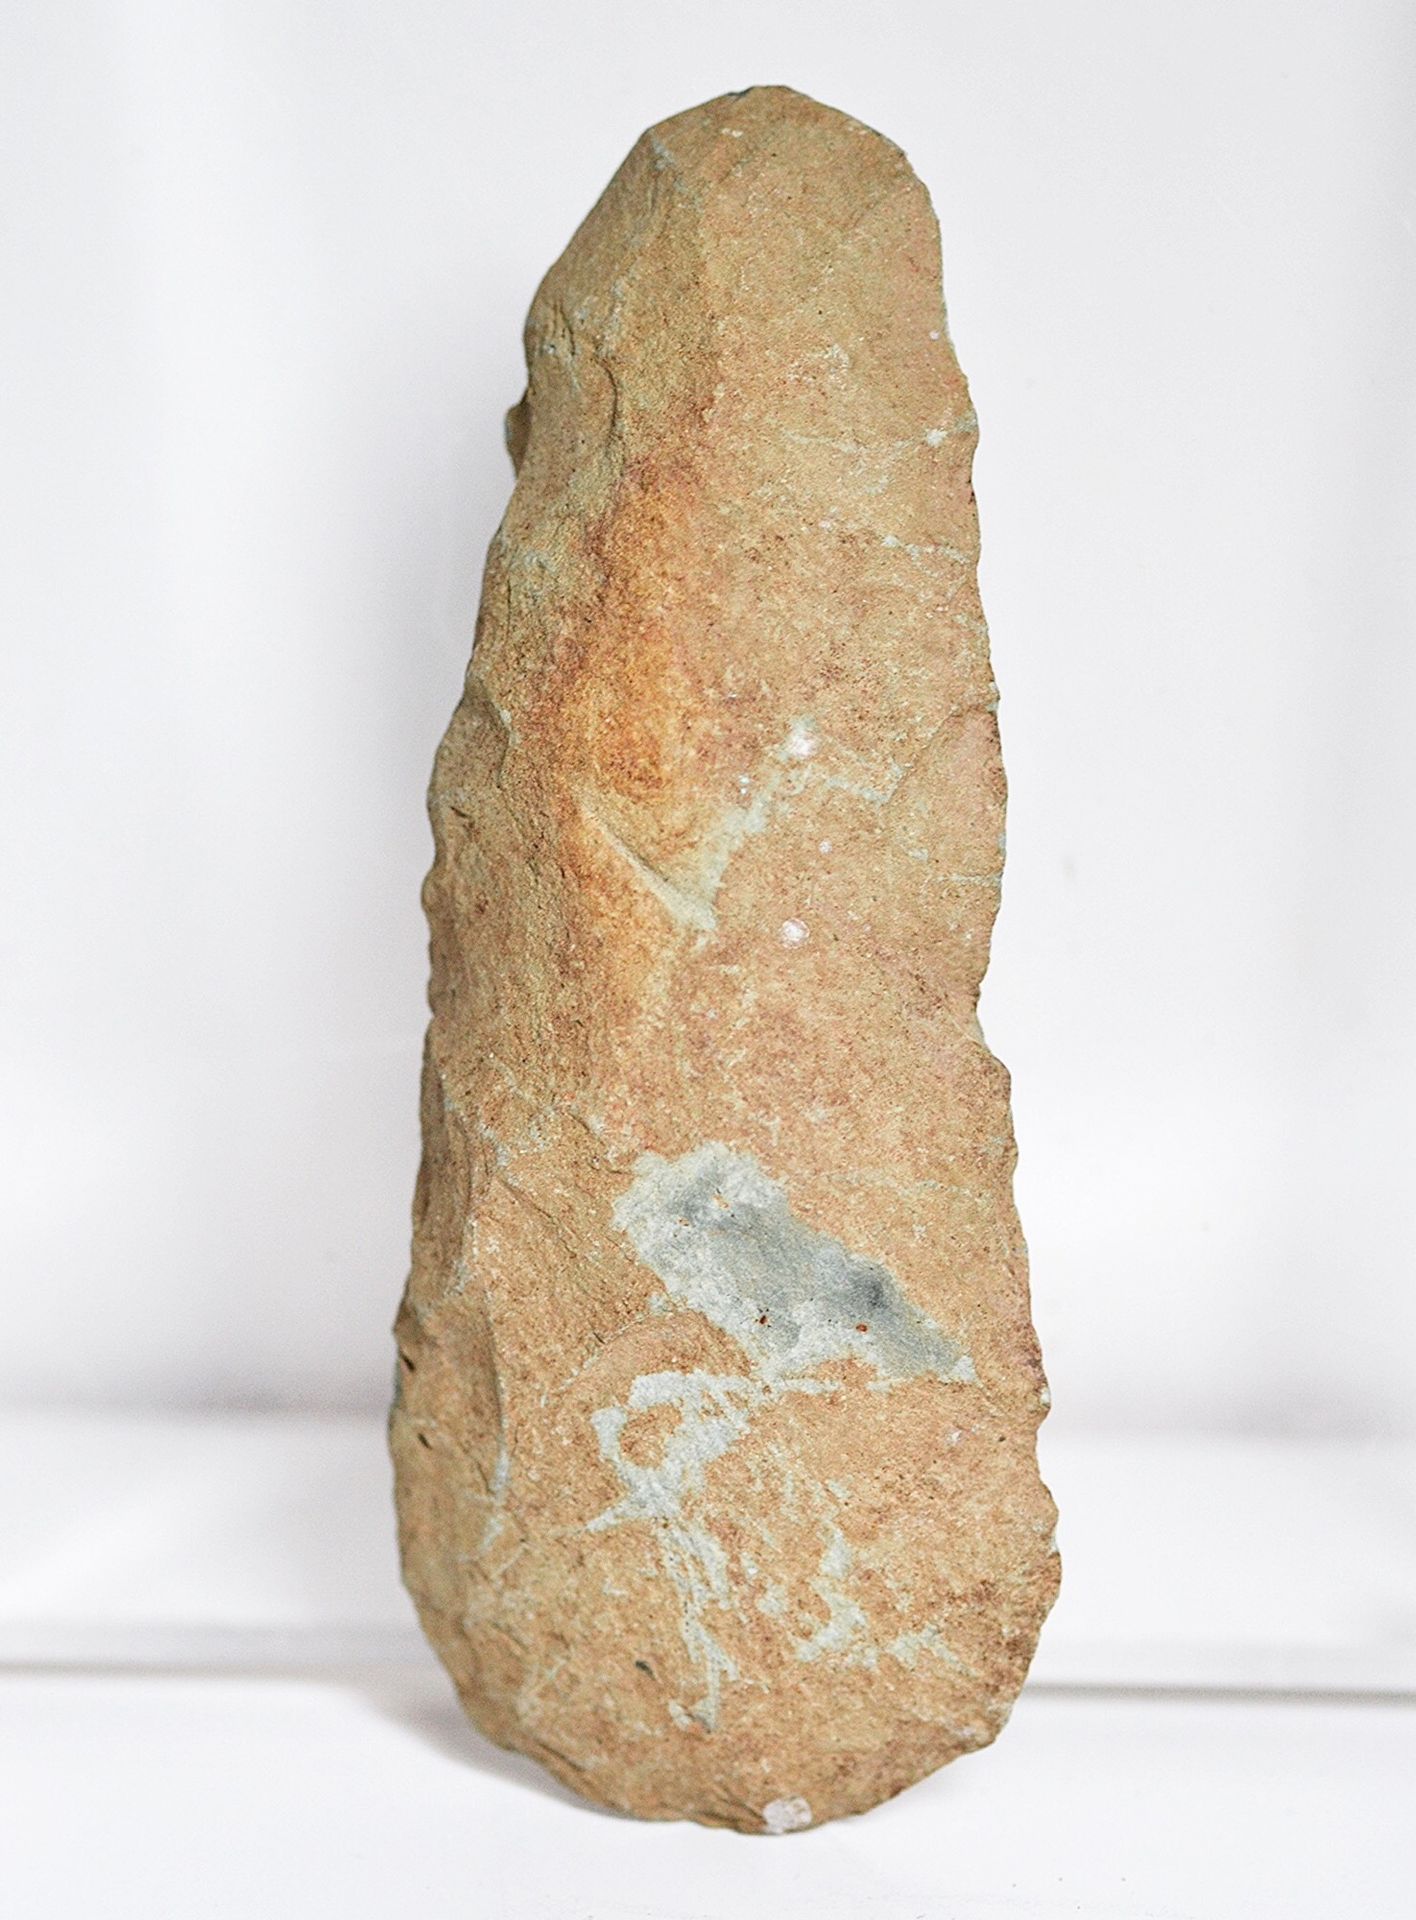 VIETNAM 越南，湄公河三角洲

 新石器时代

 

 湄公河中发现的青石刀或斧头

 前英国收藏。

 

 尺寸：13 x 5 cm